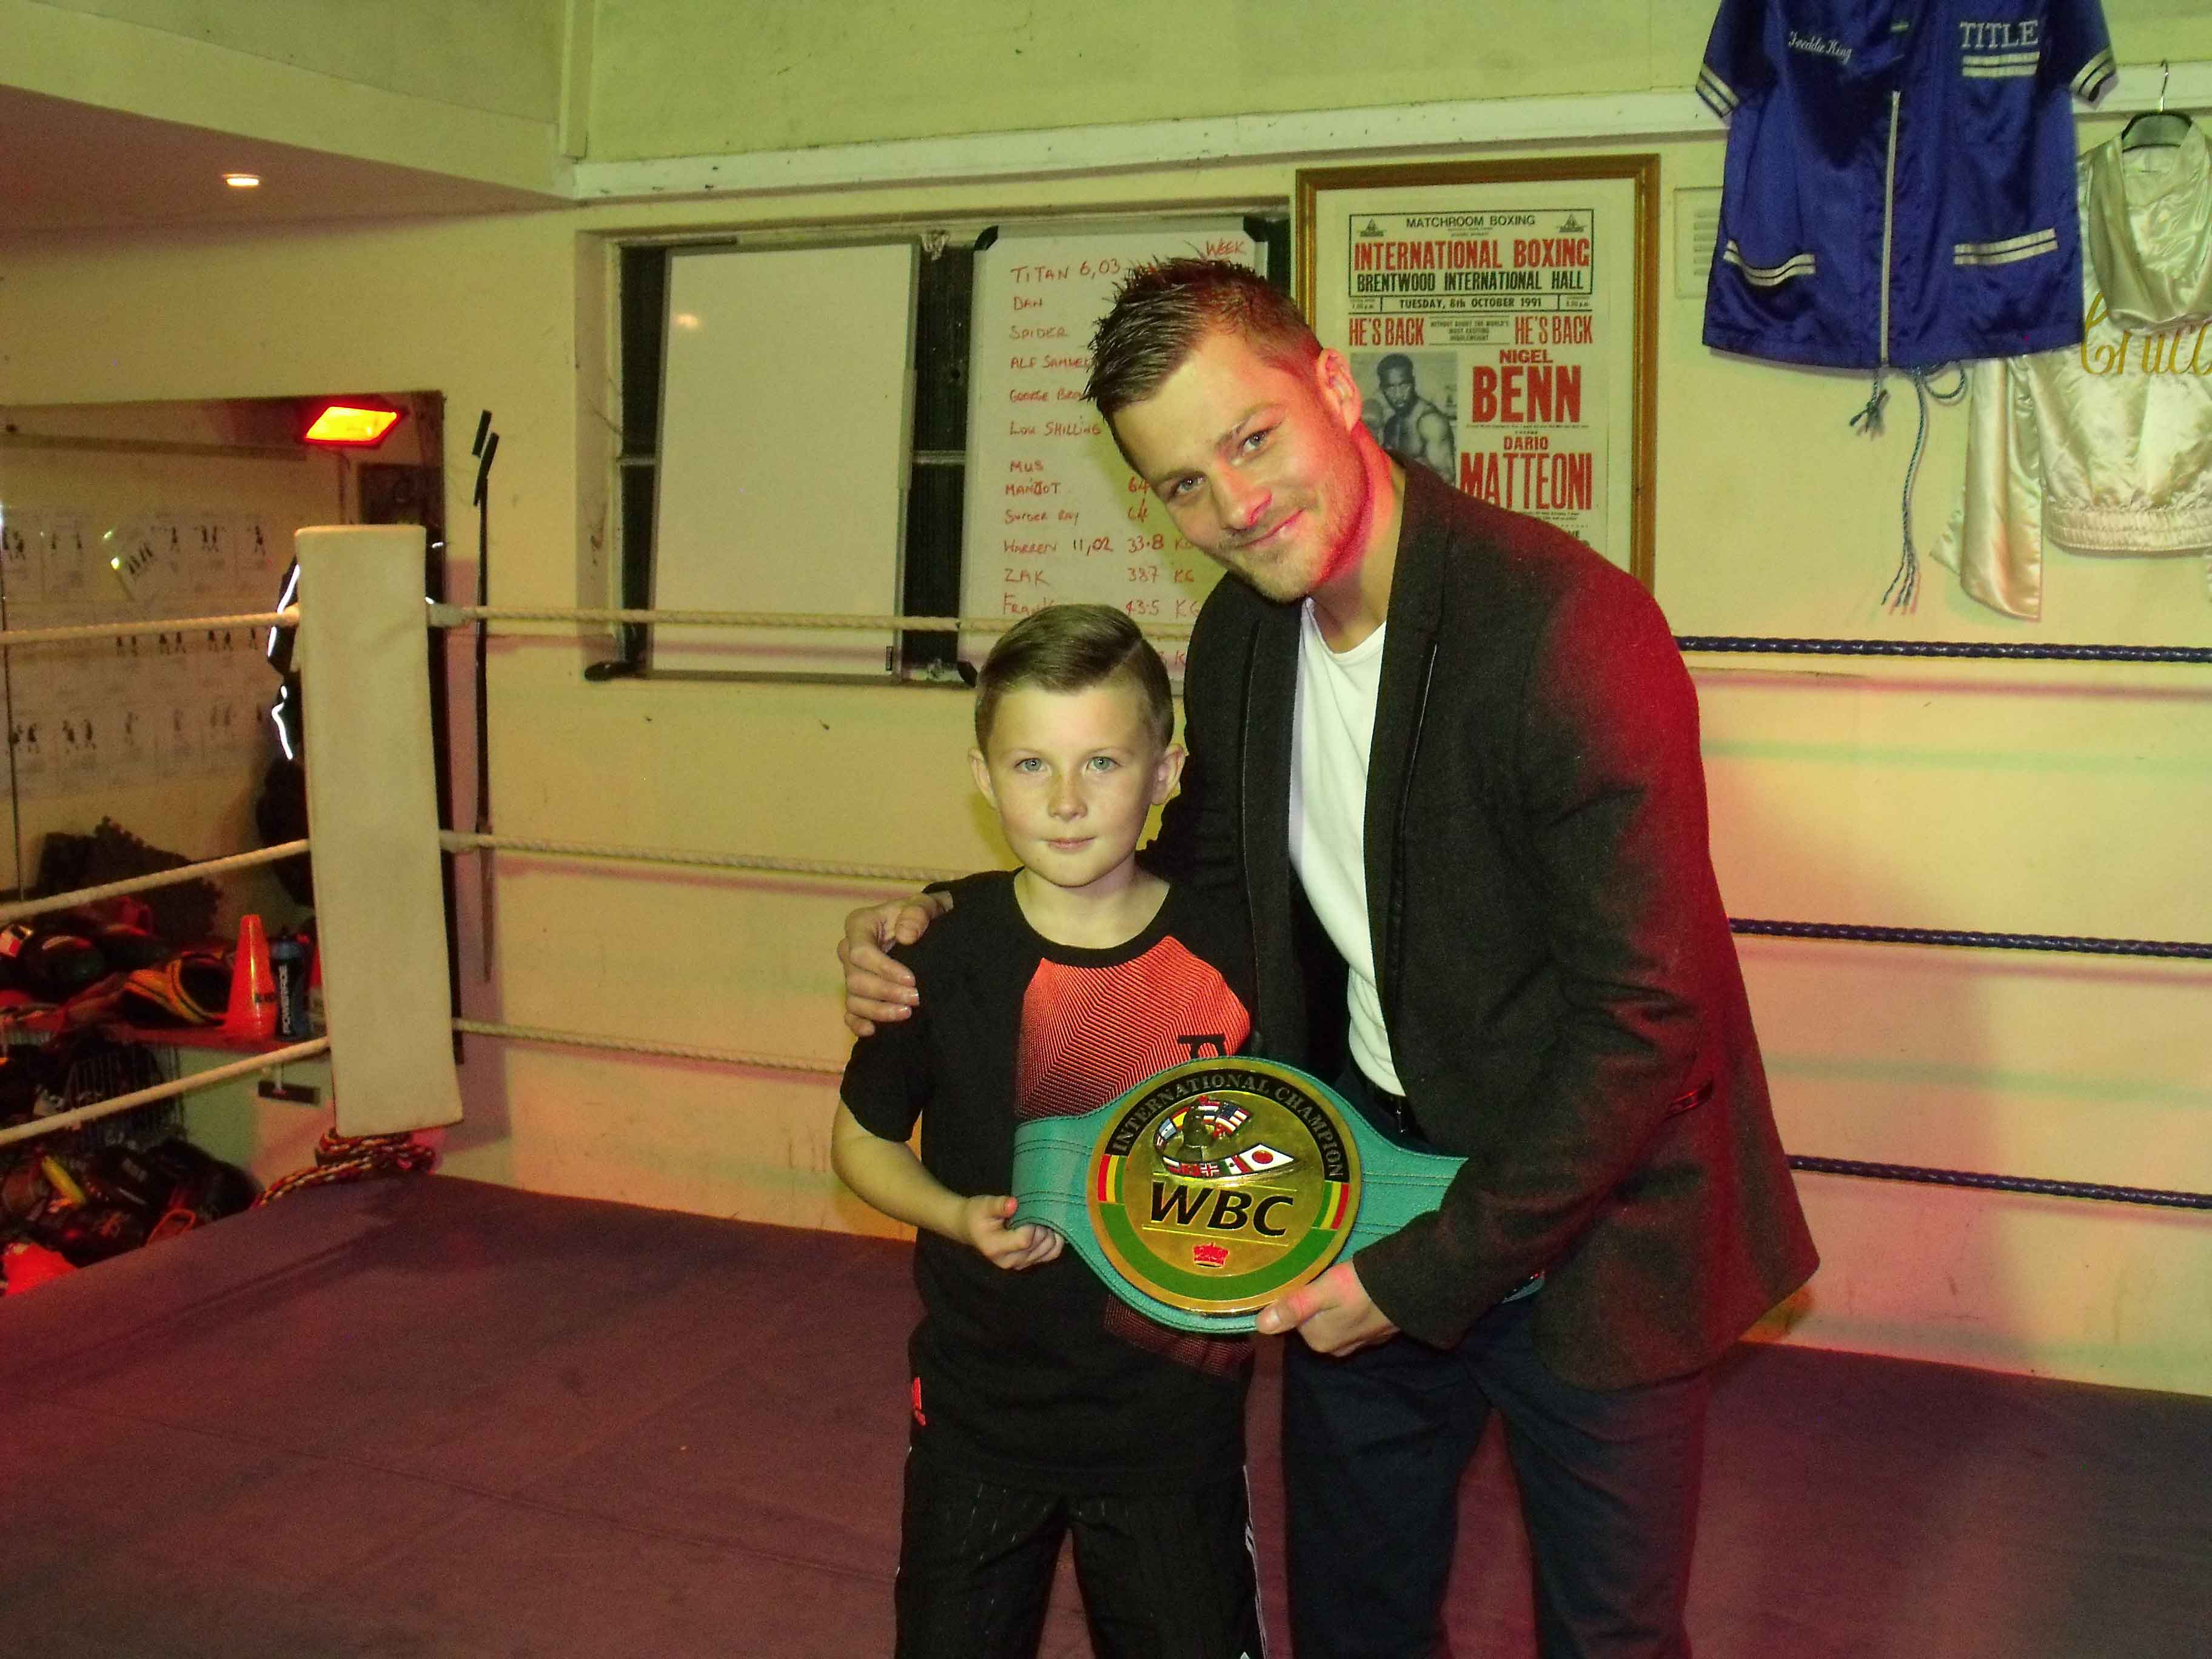 February 2015 GB Boxing Award Presentation